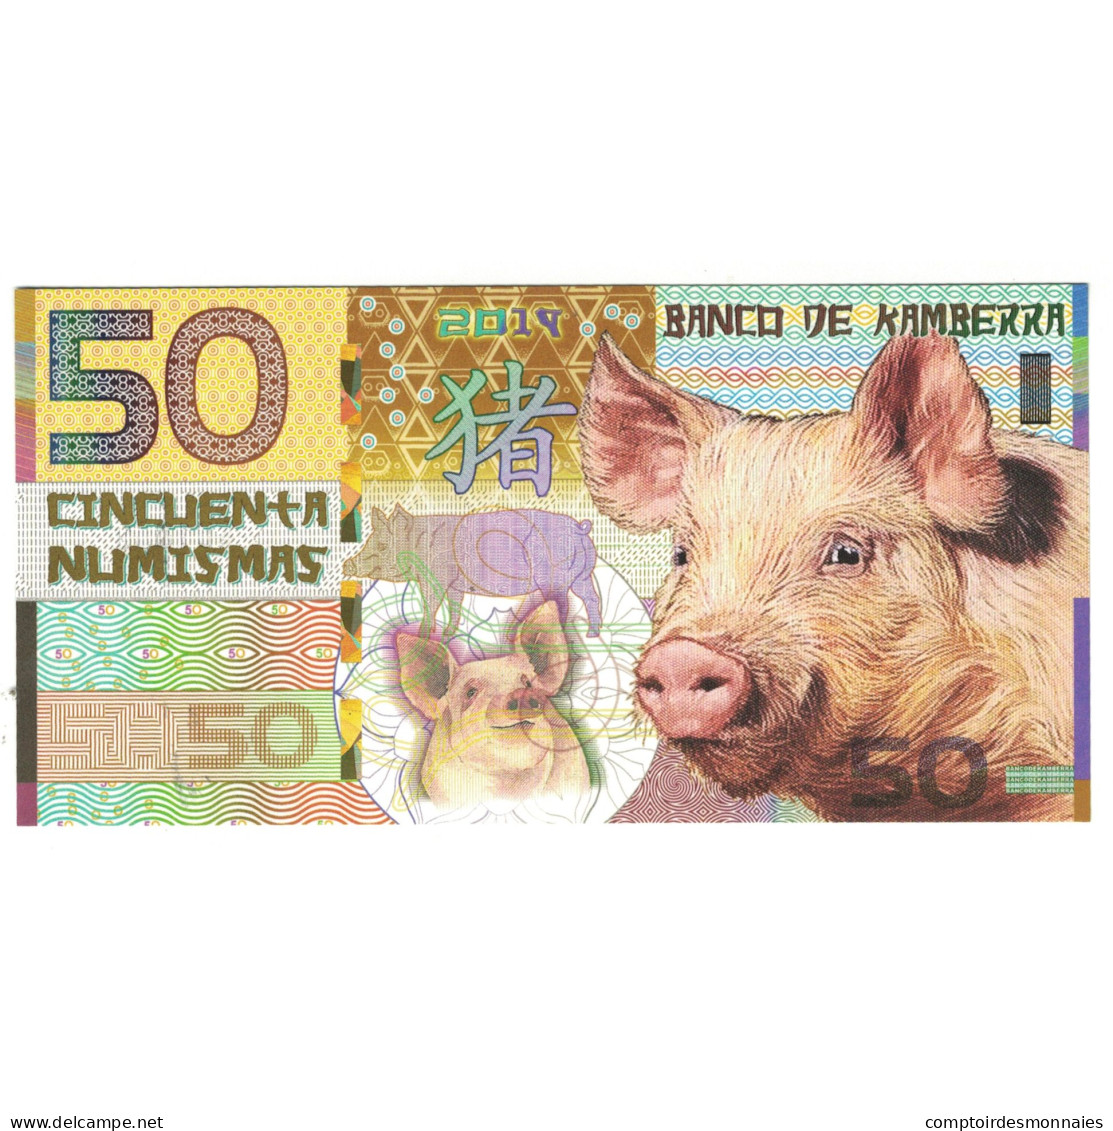 Billet, Australie, Billet Touristique, 2019, 50 Dollars ,Colorful Plastic - Fakes & Specimens